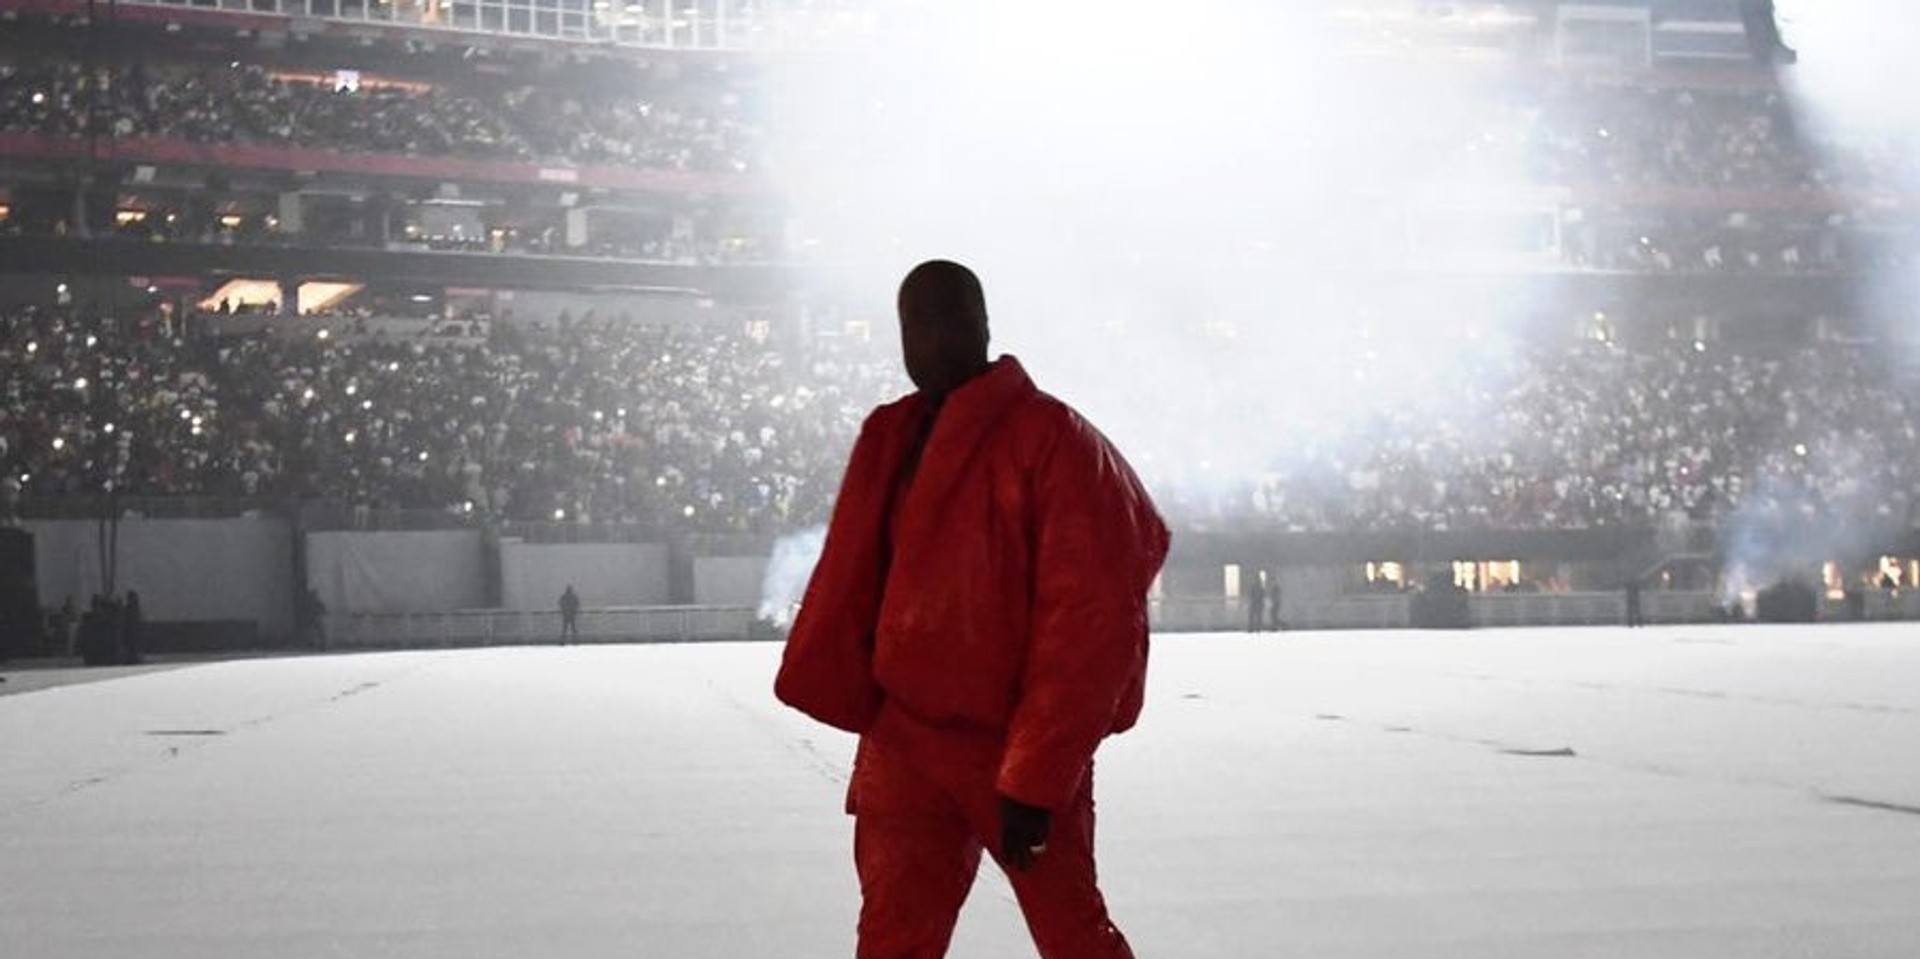 Kanye West has finally released DONDA - listen